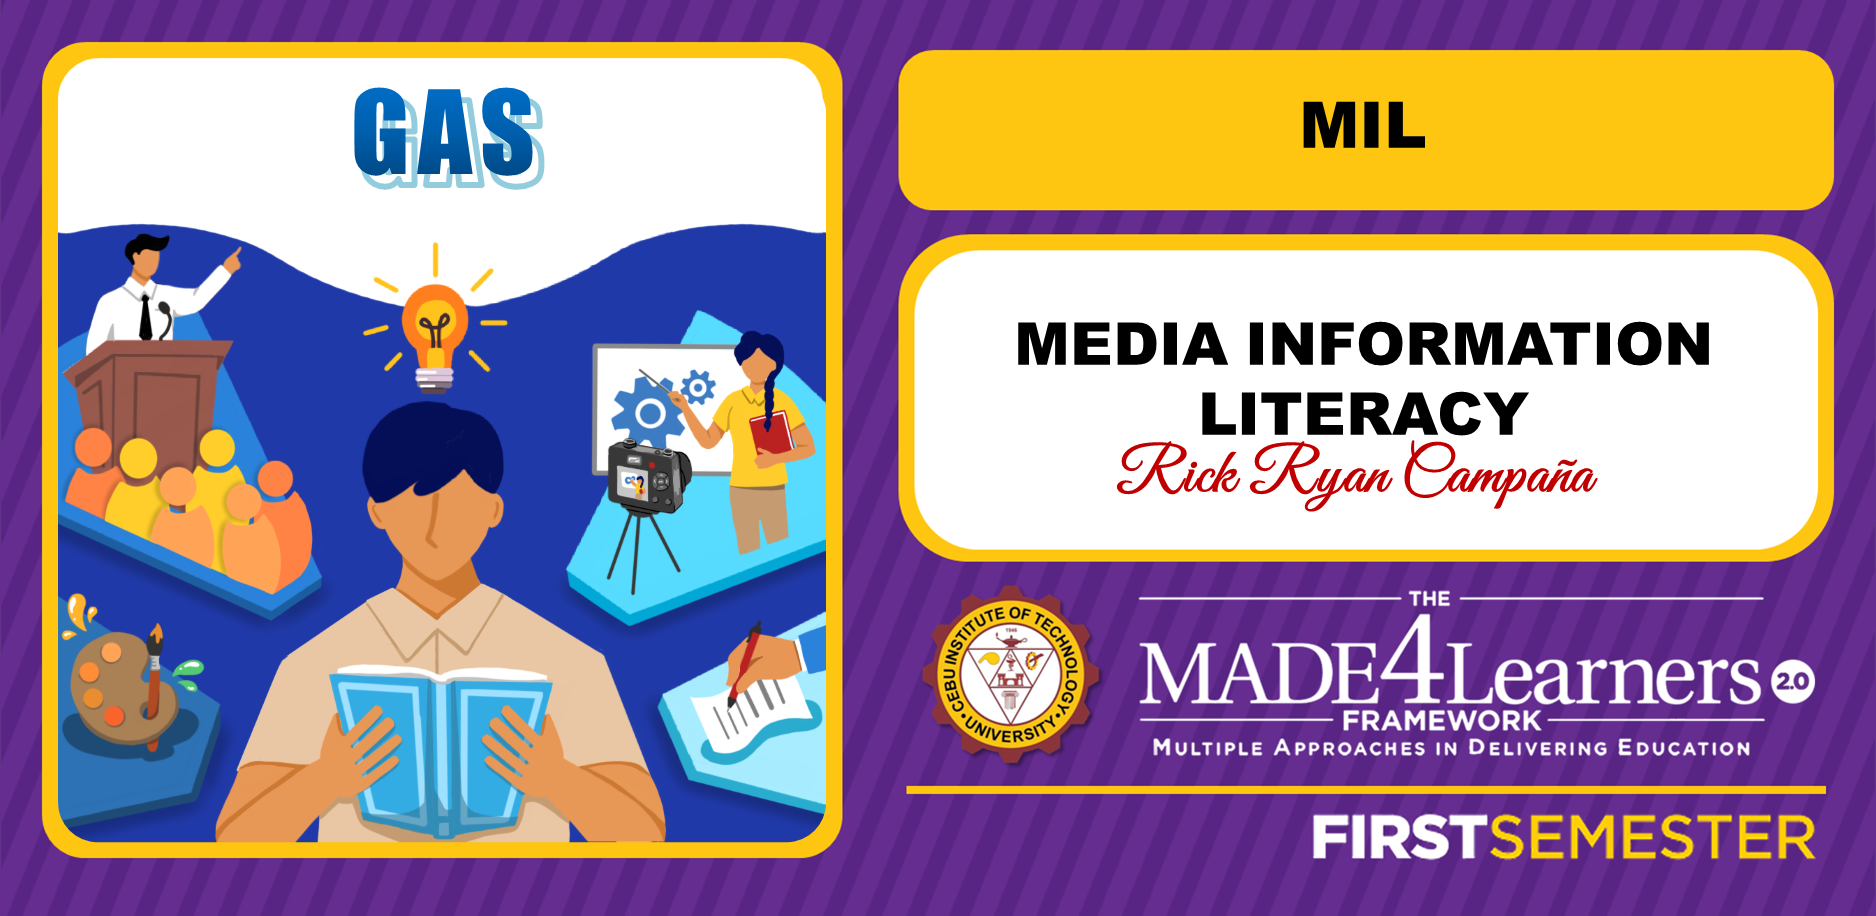 MIL: Media Information Literacy (Campana)